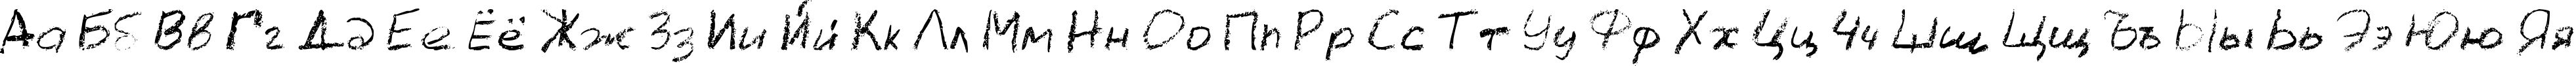 Пример написания русского алфавита шрифтом LC Chalk